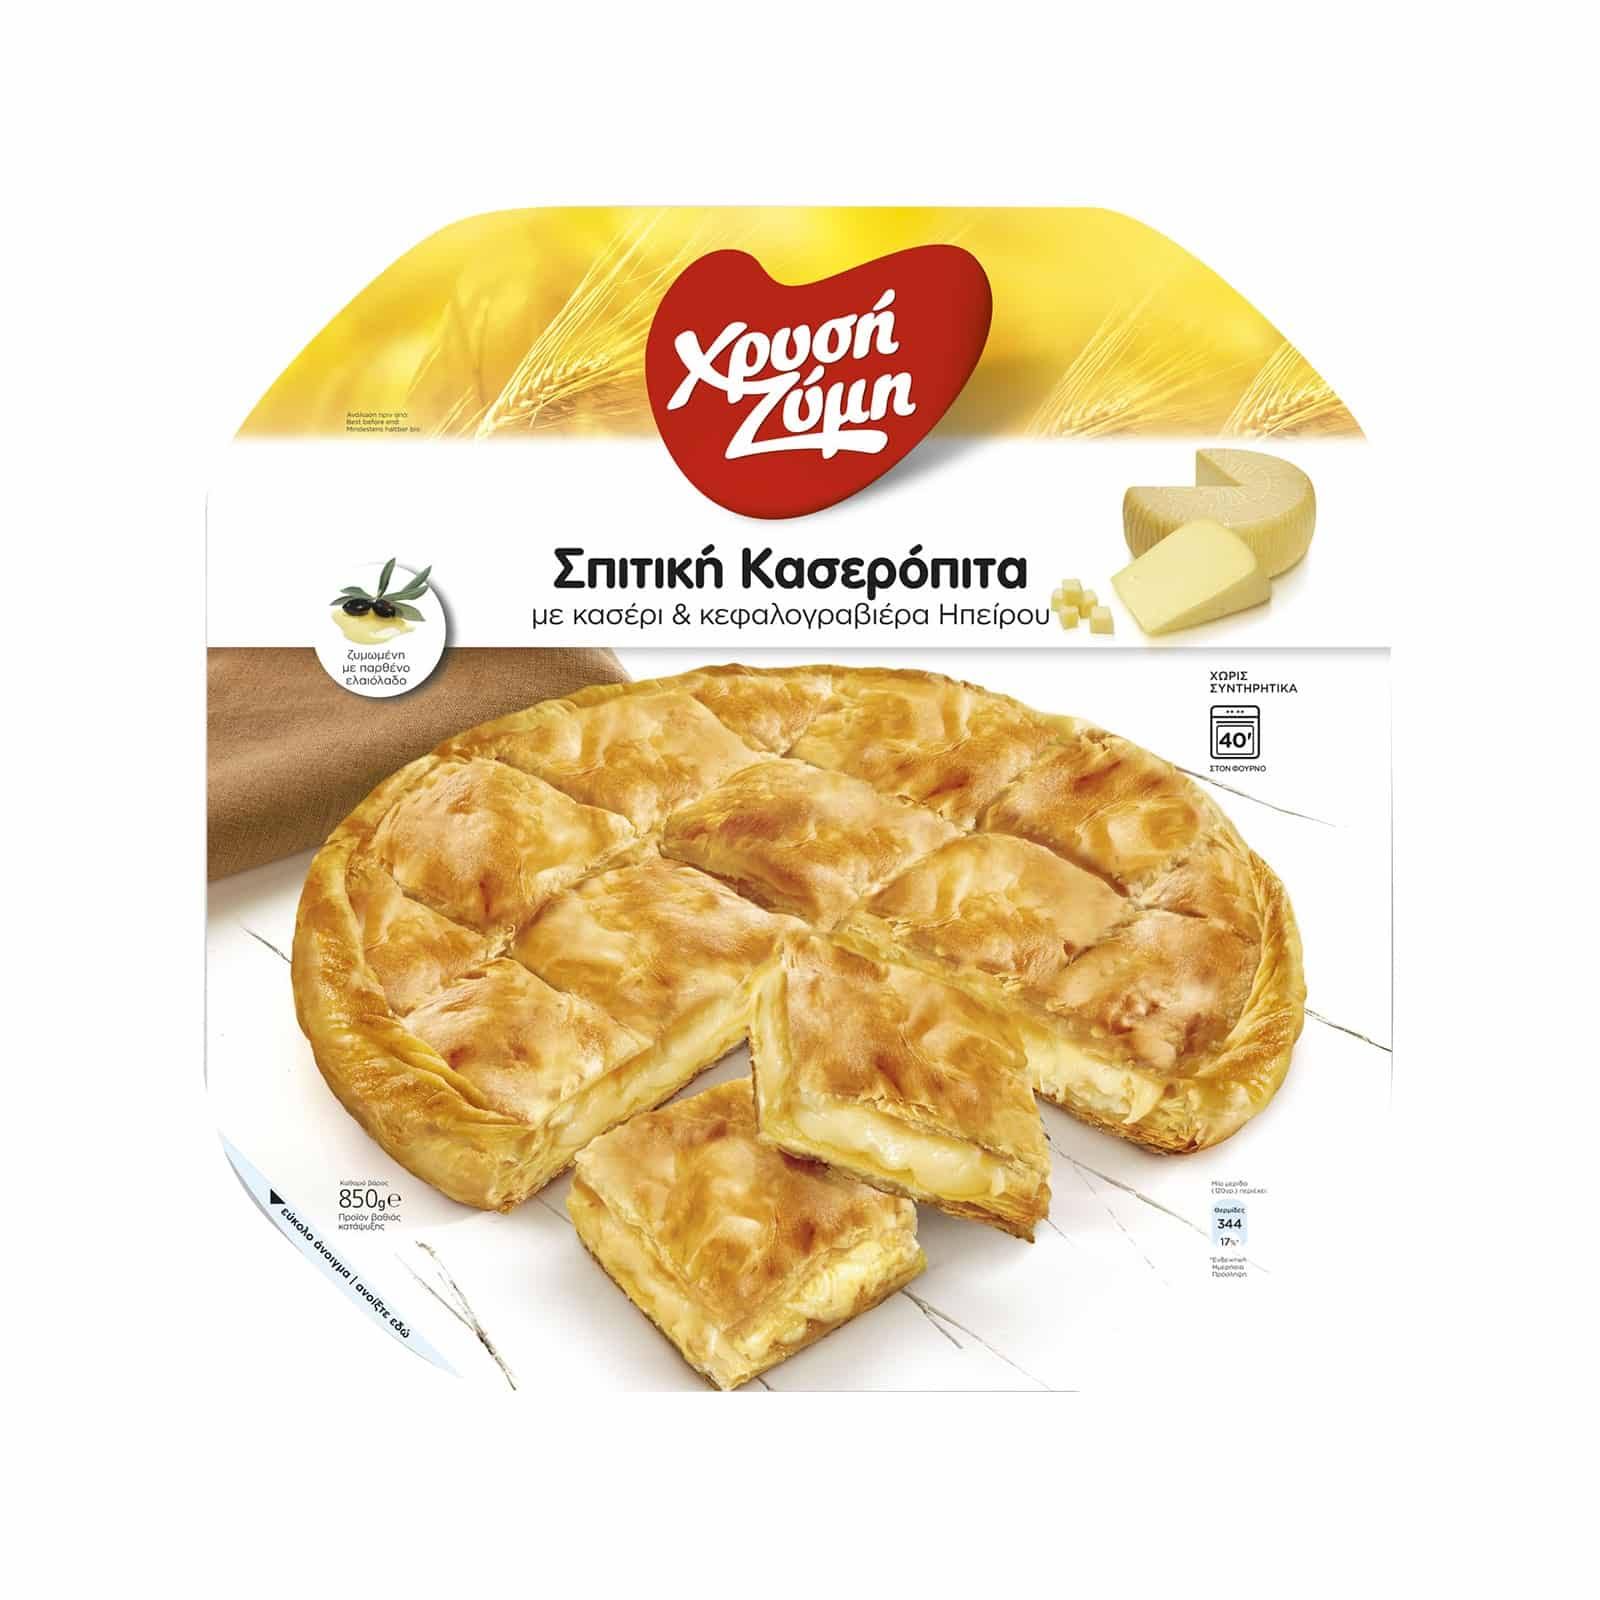 Chrysi Zimi Golden Dough Homemade Casserole Pie - 850 Grams - Greek Food Emporium - Delivered by Mercato